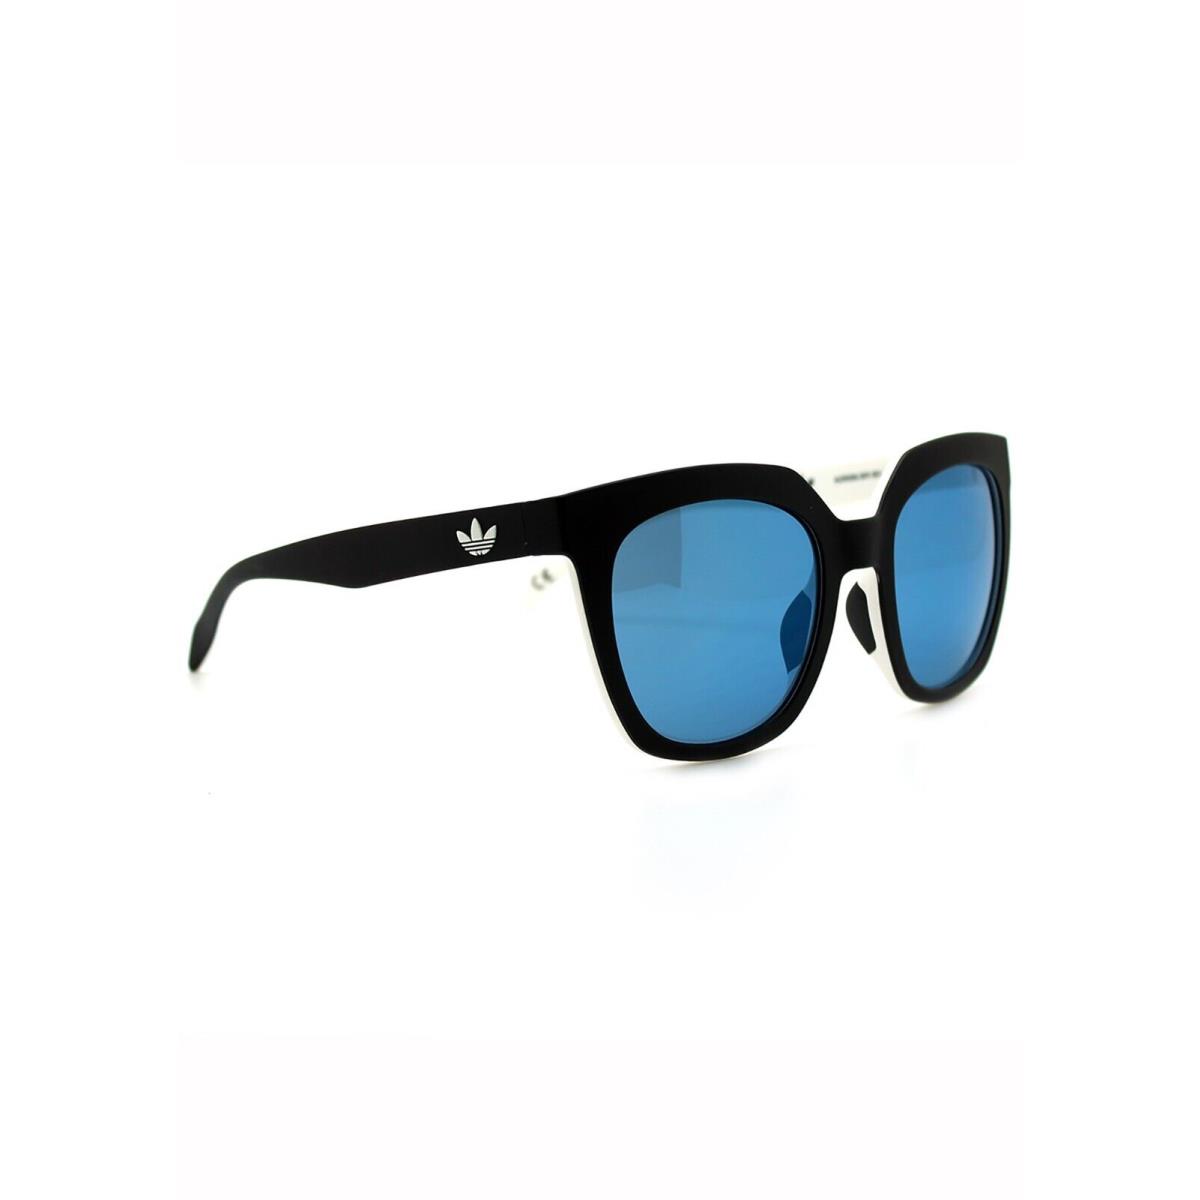 Adidas Oval Metal Series Sunglasses in Blue/black Cute